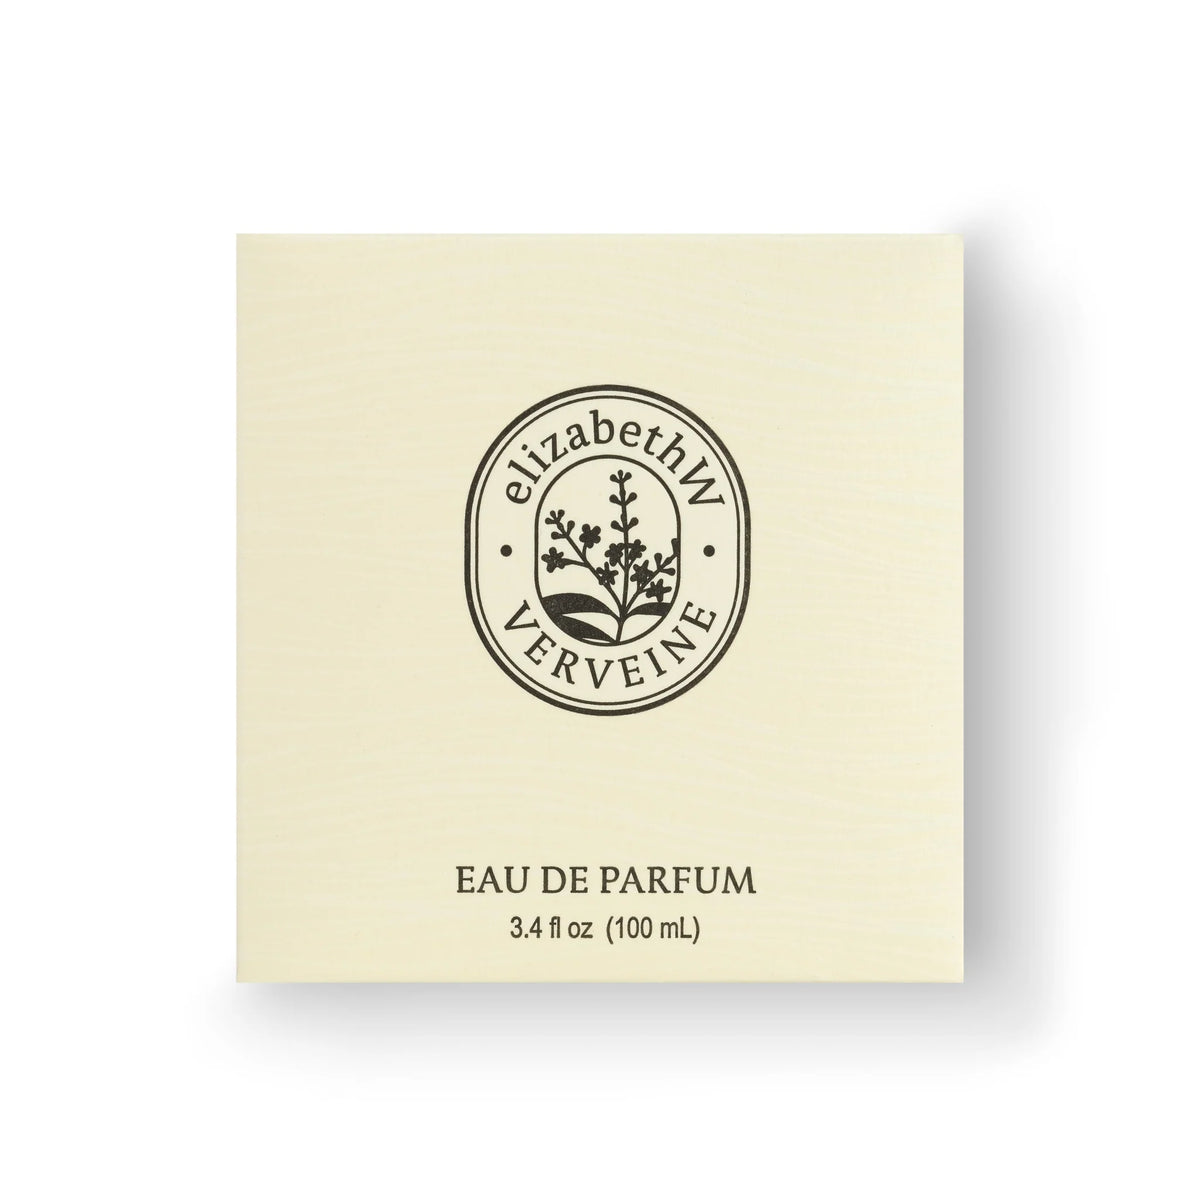 A square beige perfume box with the text "elizabeth W Atelier Verveine Eau de Parfum 3.4 oz (100 ml)" centered, featuring a circular botanical design by elizabeth W.